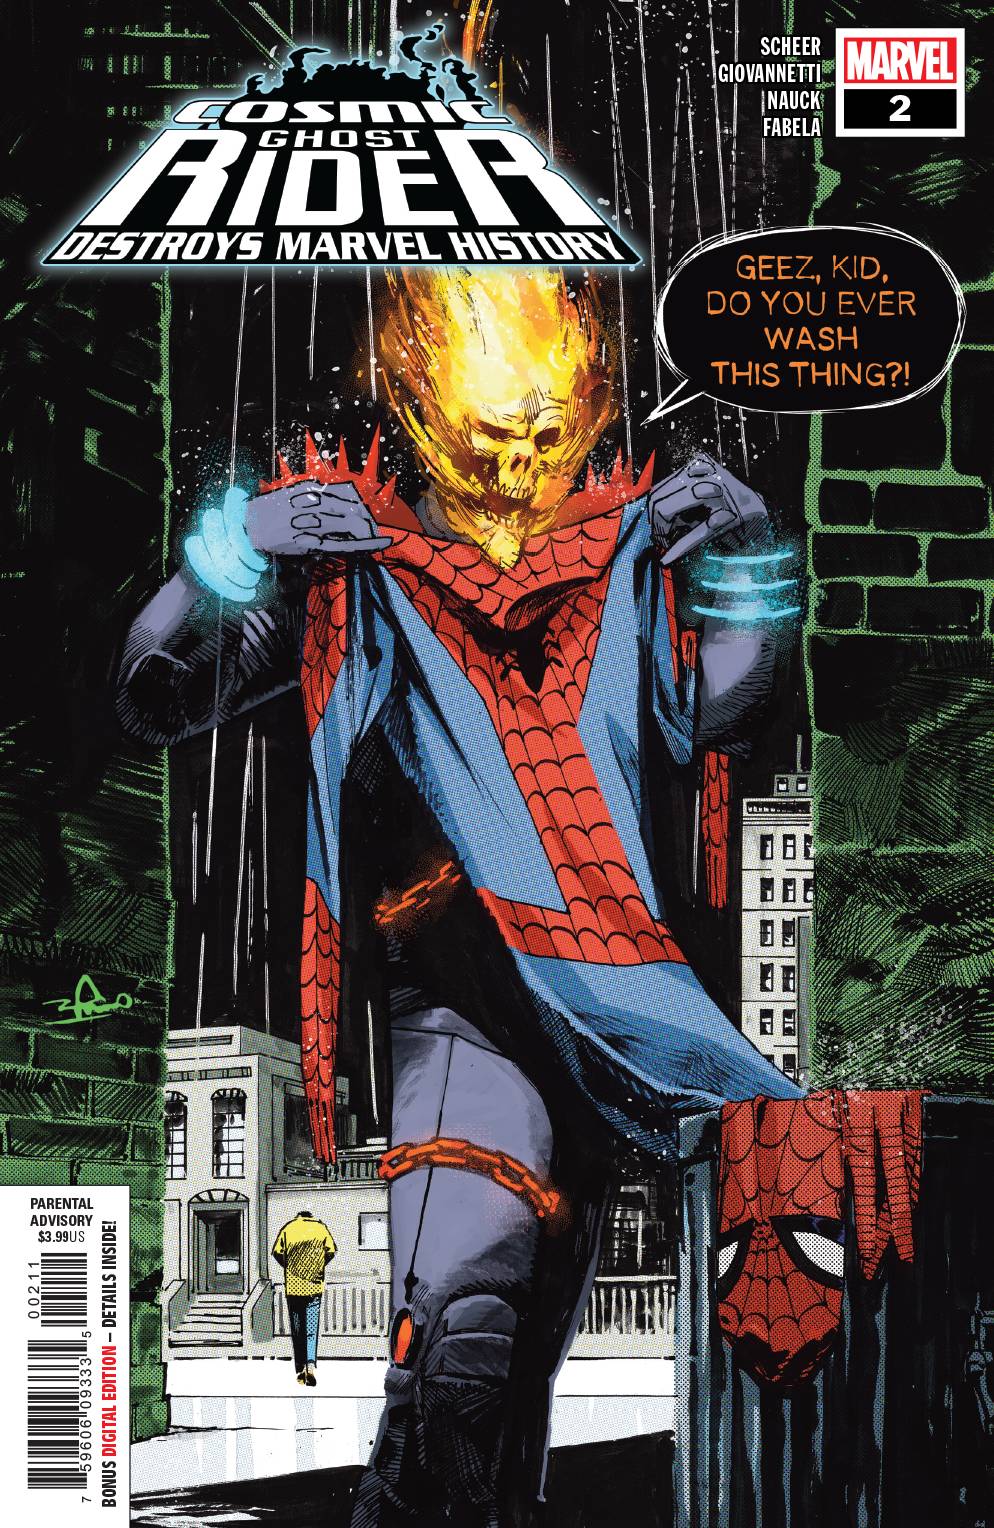 Cosmic Ghost Rider Destroys Marvel History #2 (Of 6)